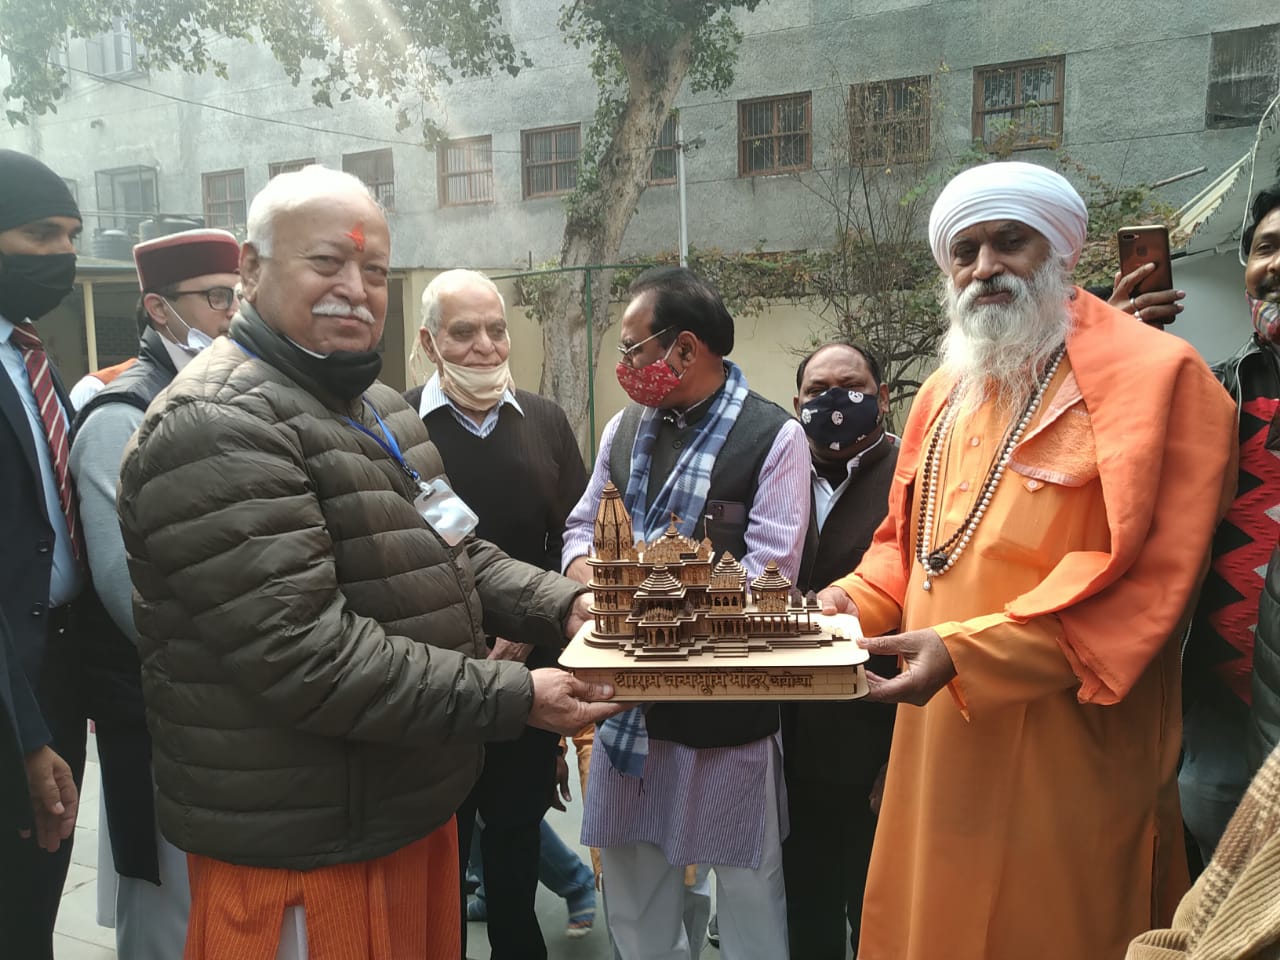 Shri Ramjanmabhumi Mandir Nidhi Samarpan and Sampark Abhiyan launched today across the country